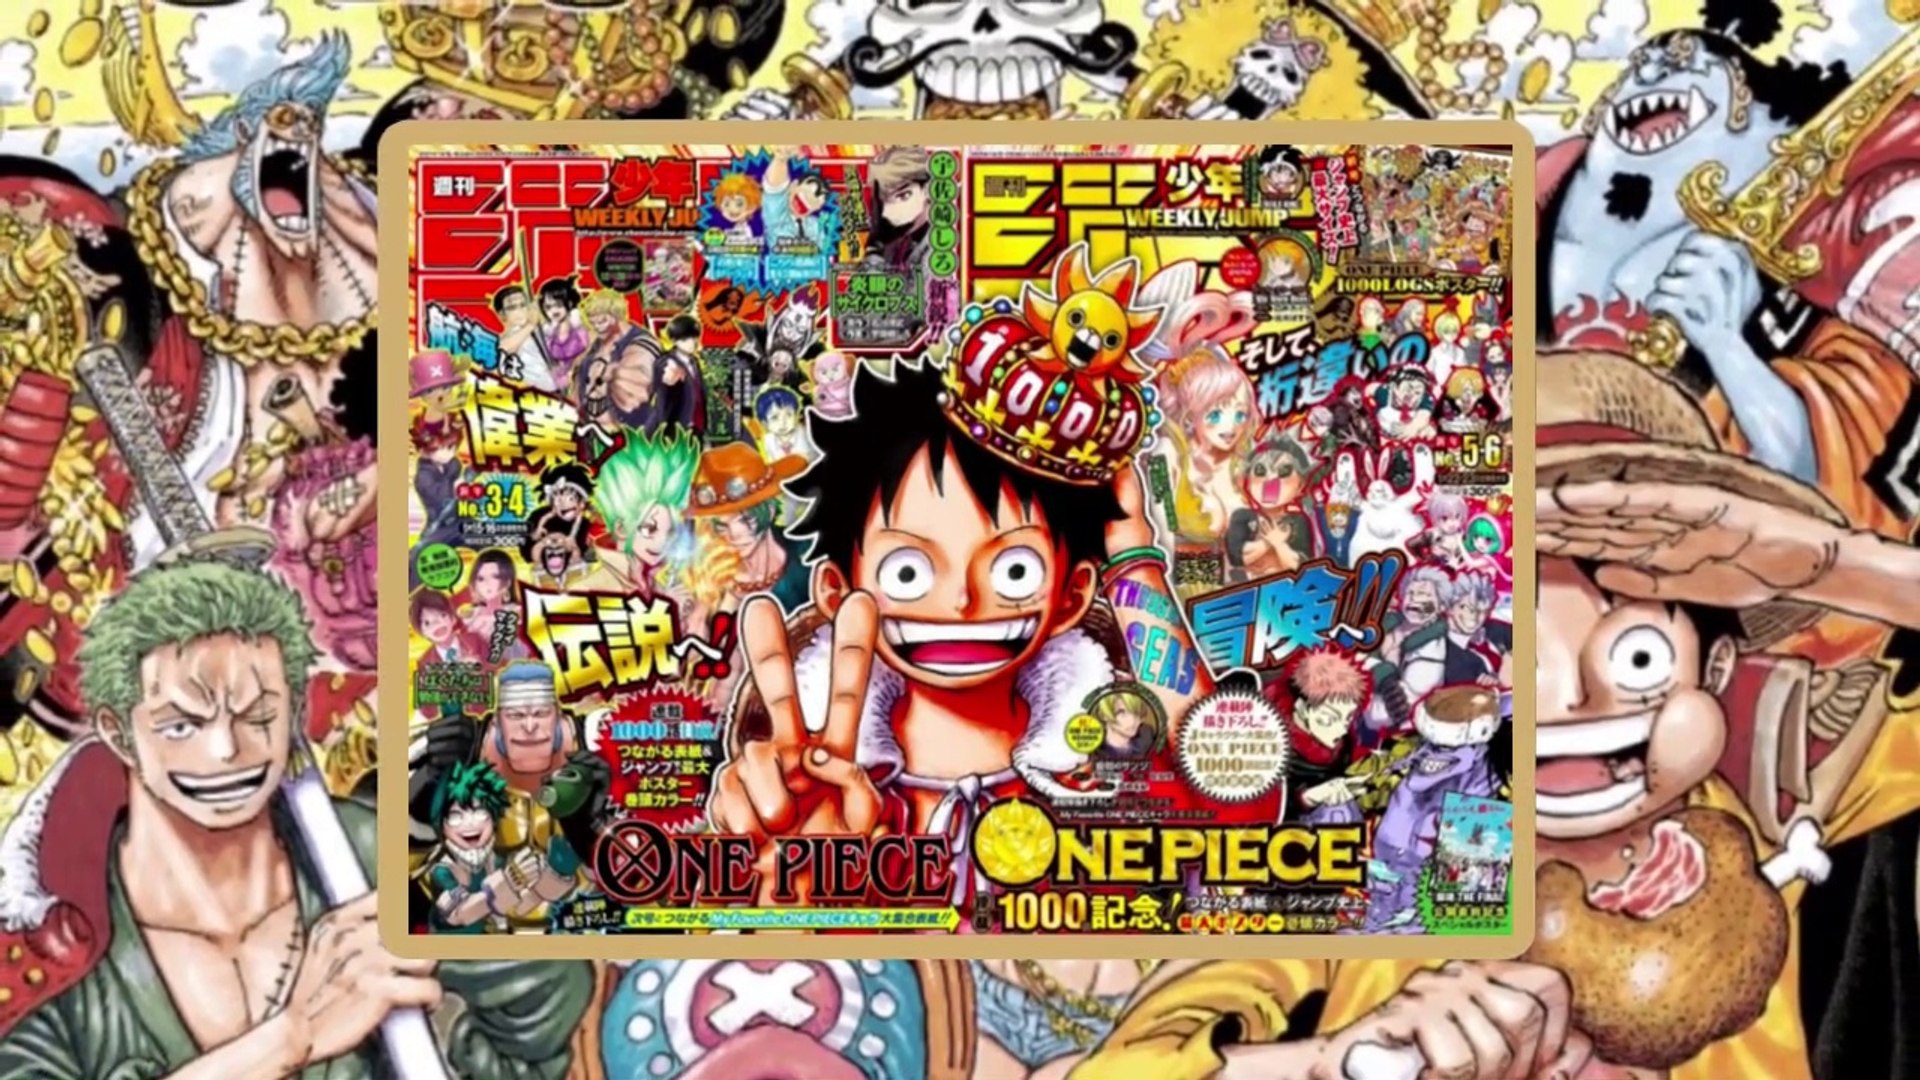 One Piece Manga Reviews